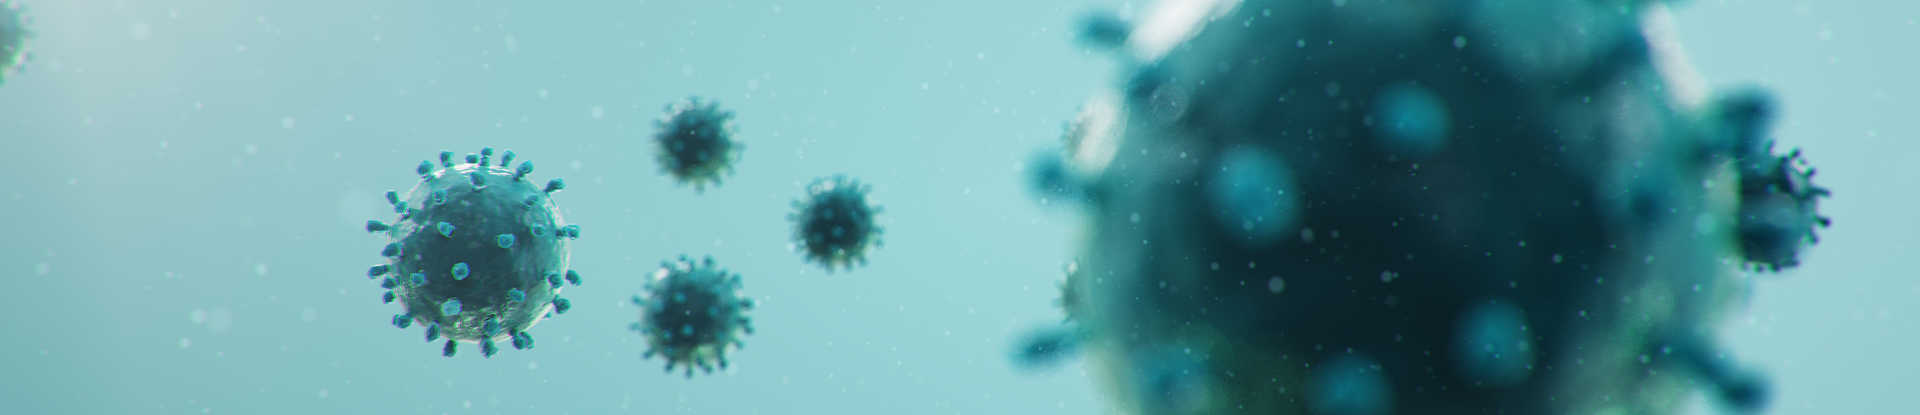 3D illustration outbreak coronavirus concept under the microscope